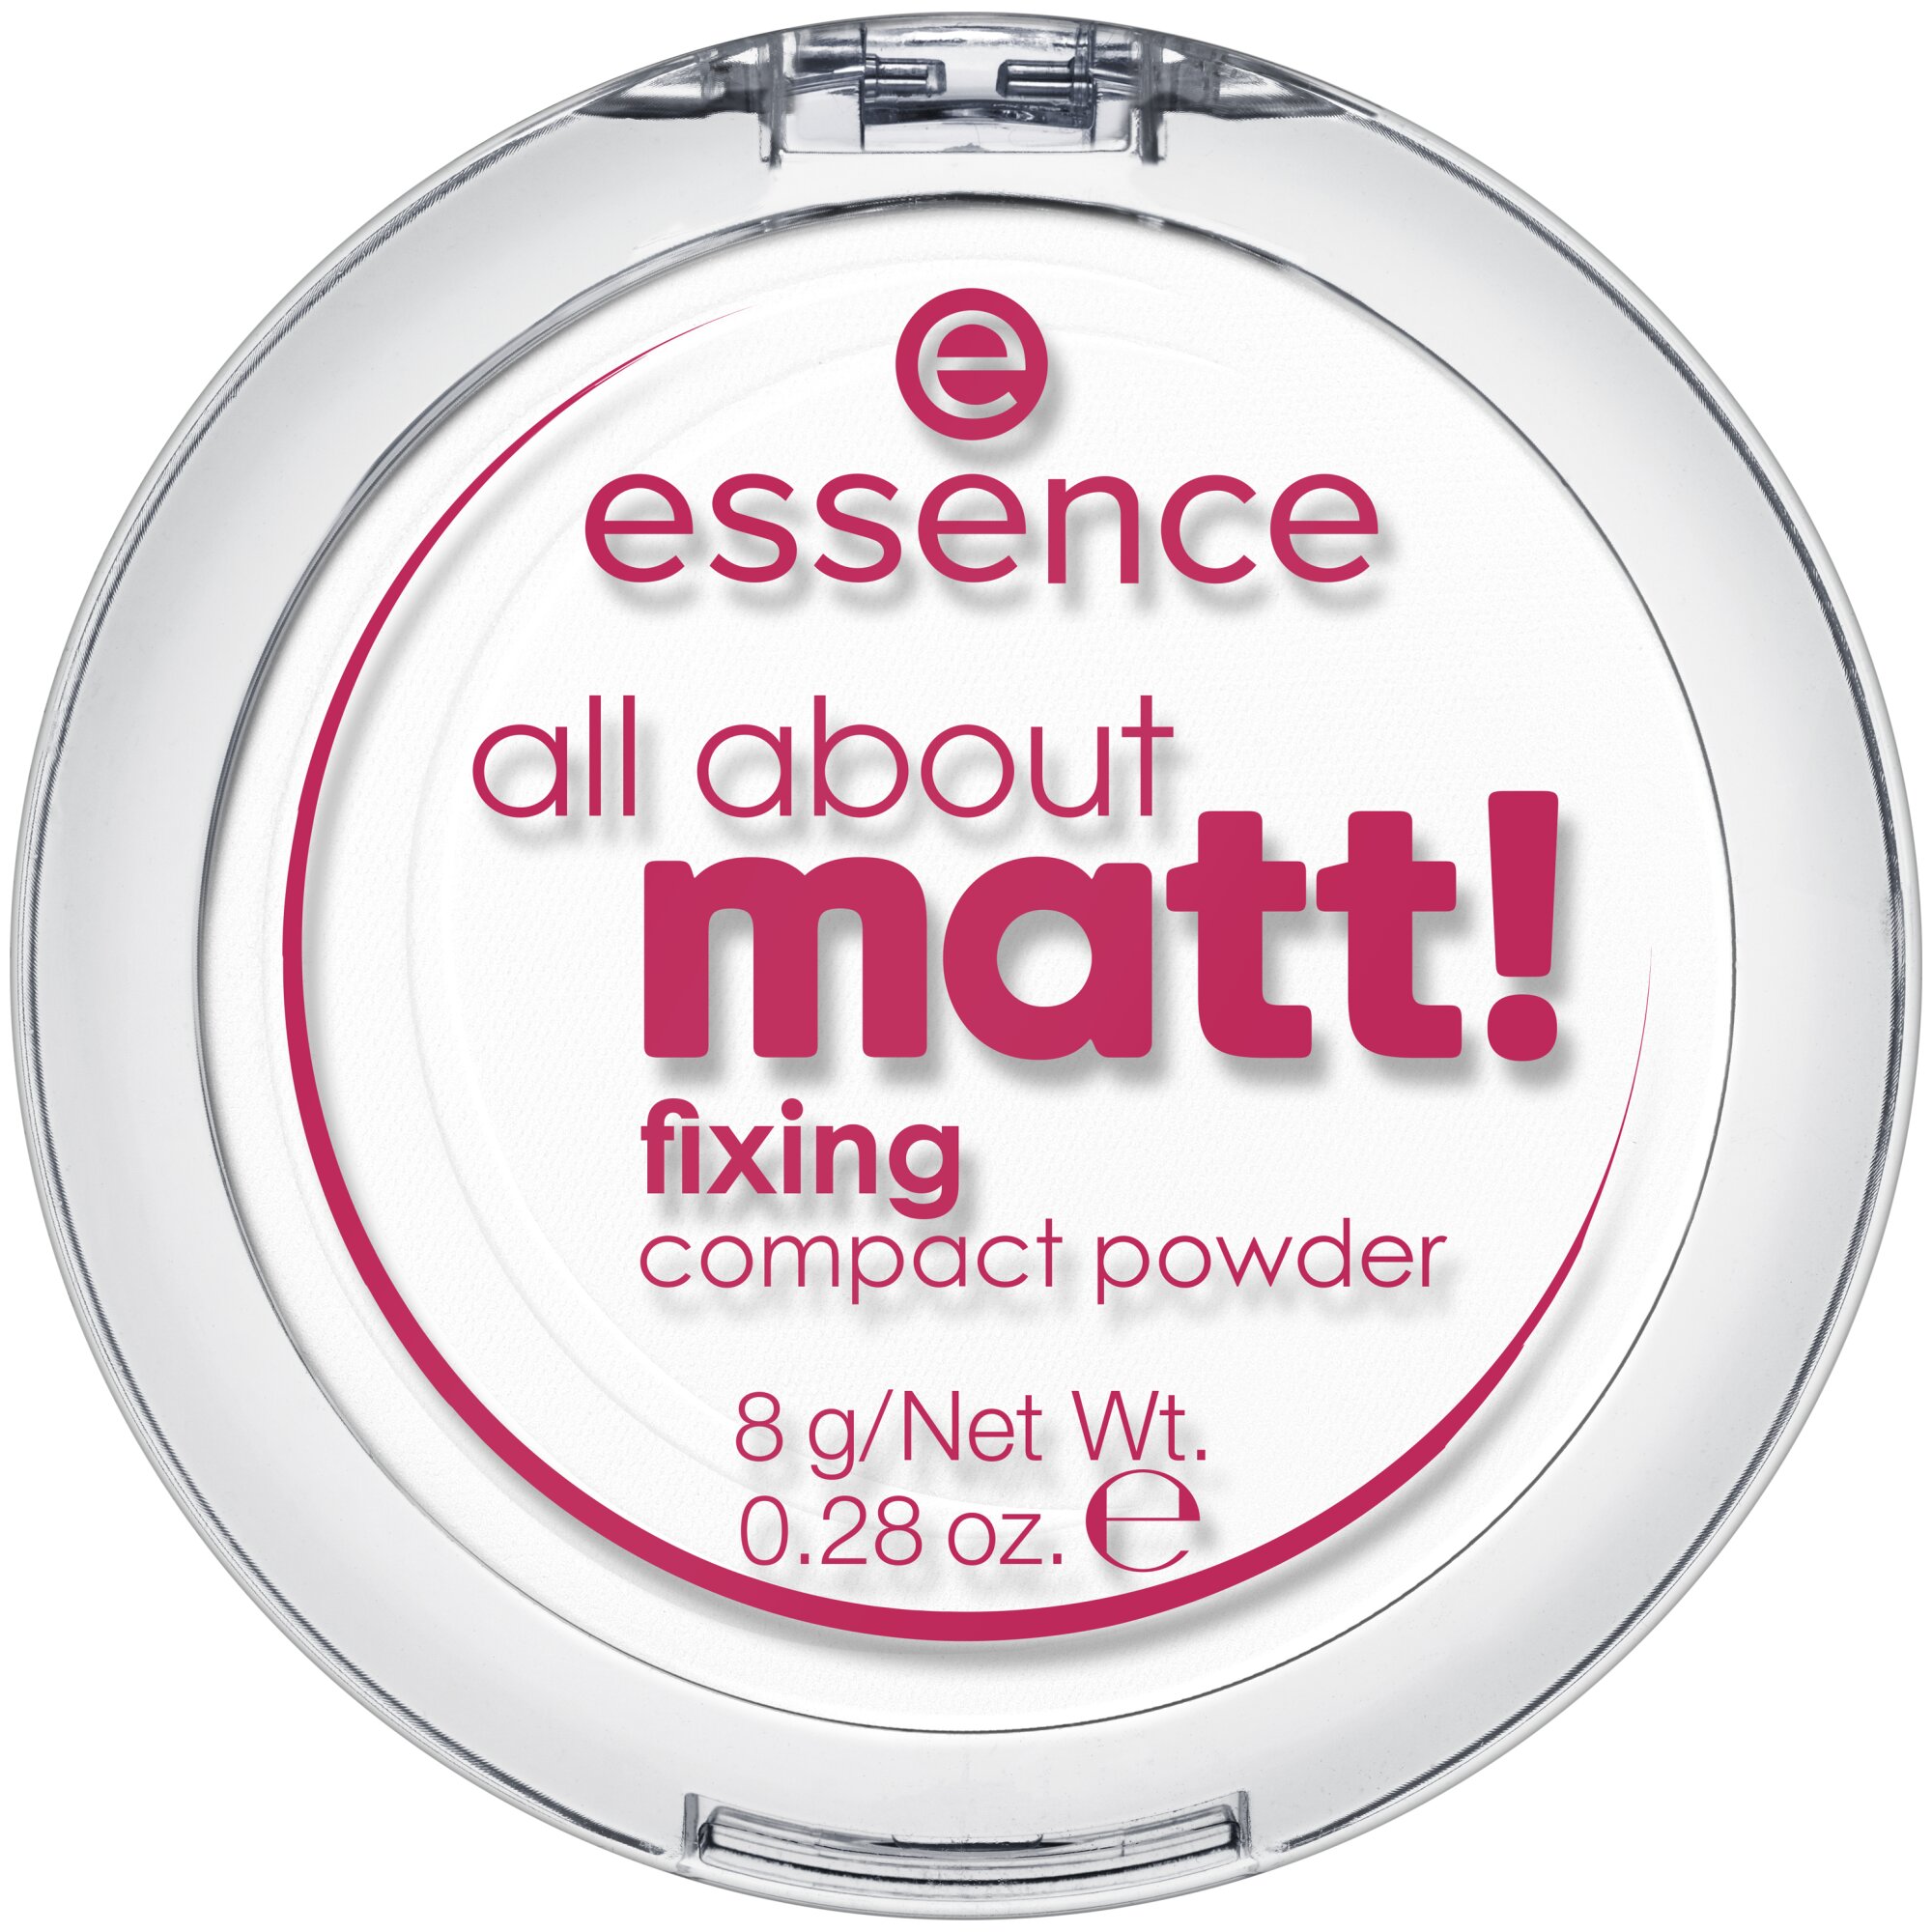 Pudra compacta All About Matt!, Fixing Compact Powder, 8 g, Essence